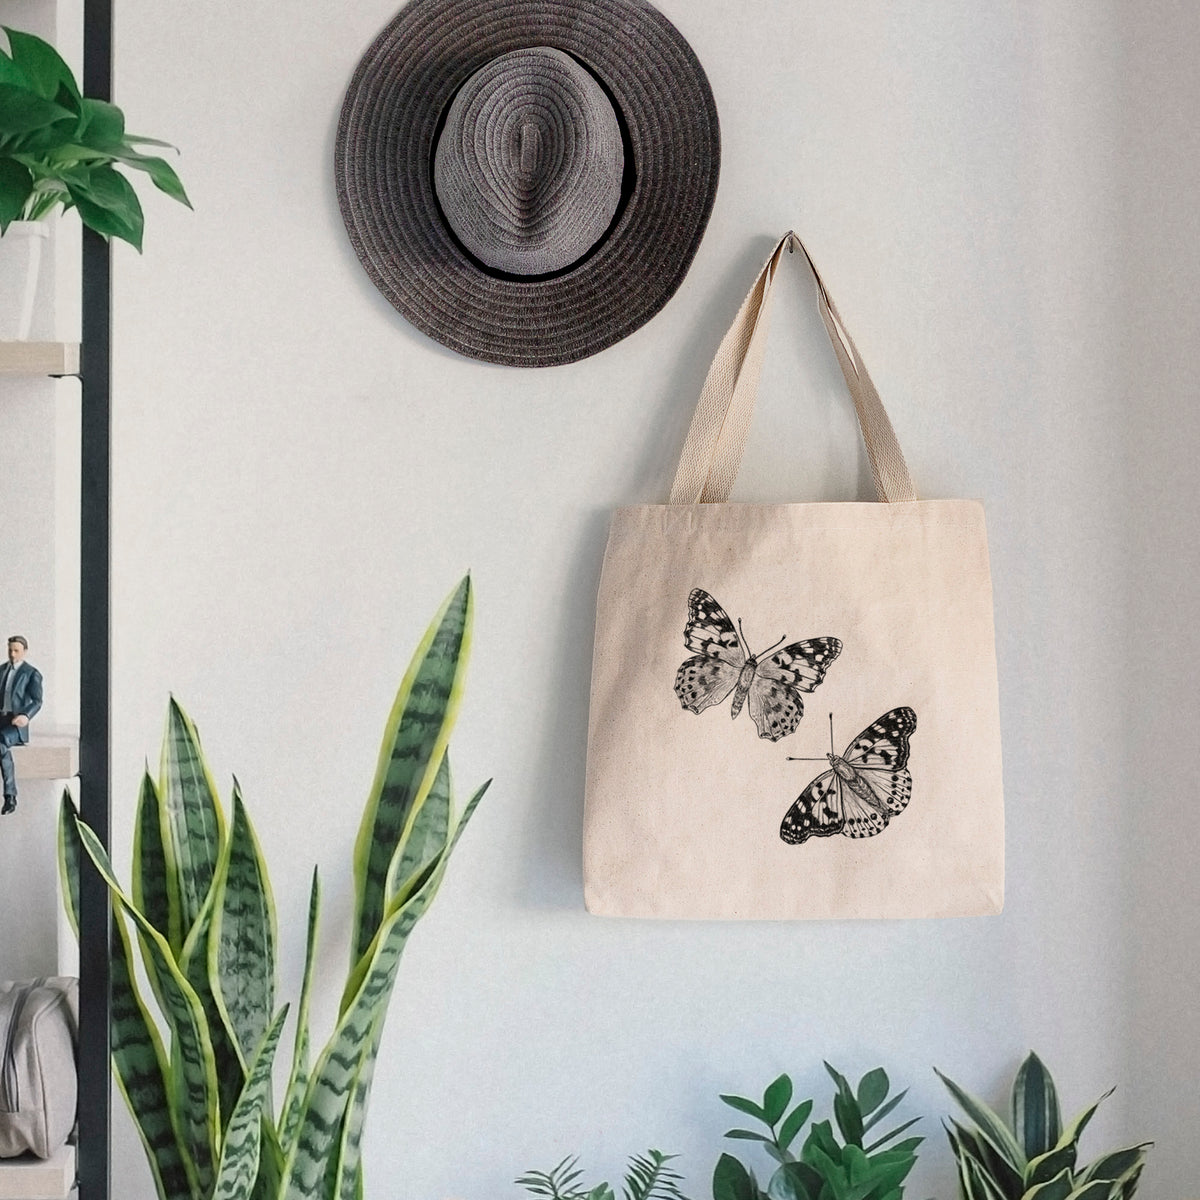 Painted Lady Butterflies - Tote Bag